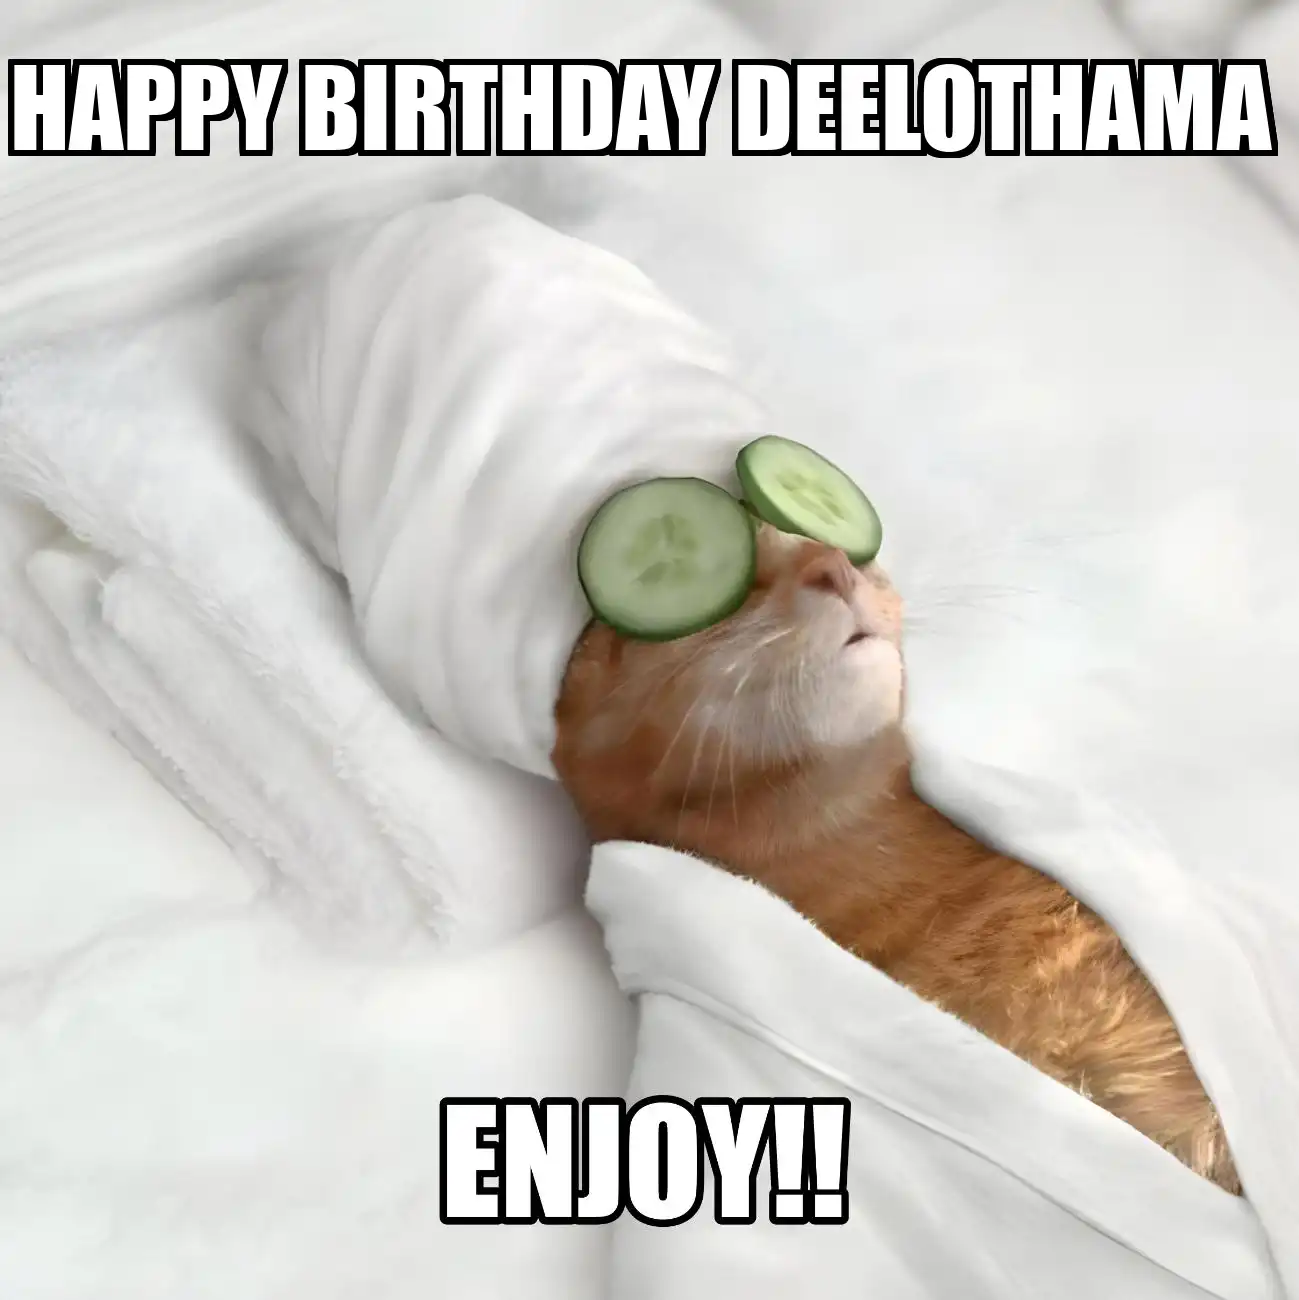 Happy Birthday Deelothama Enjoy Cat Meme